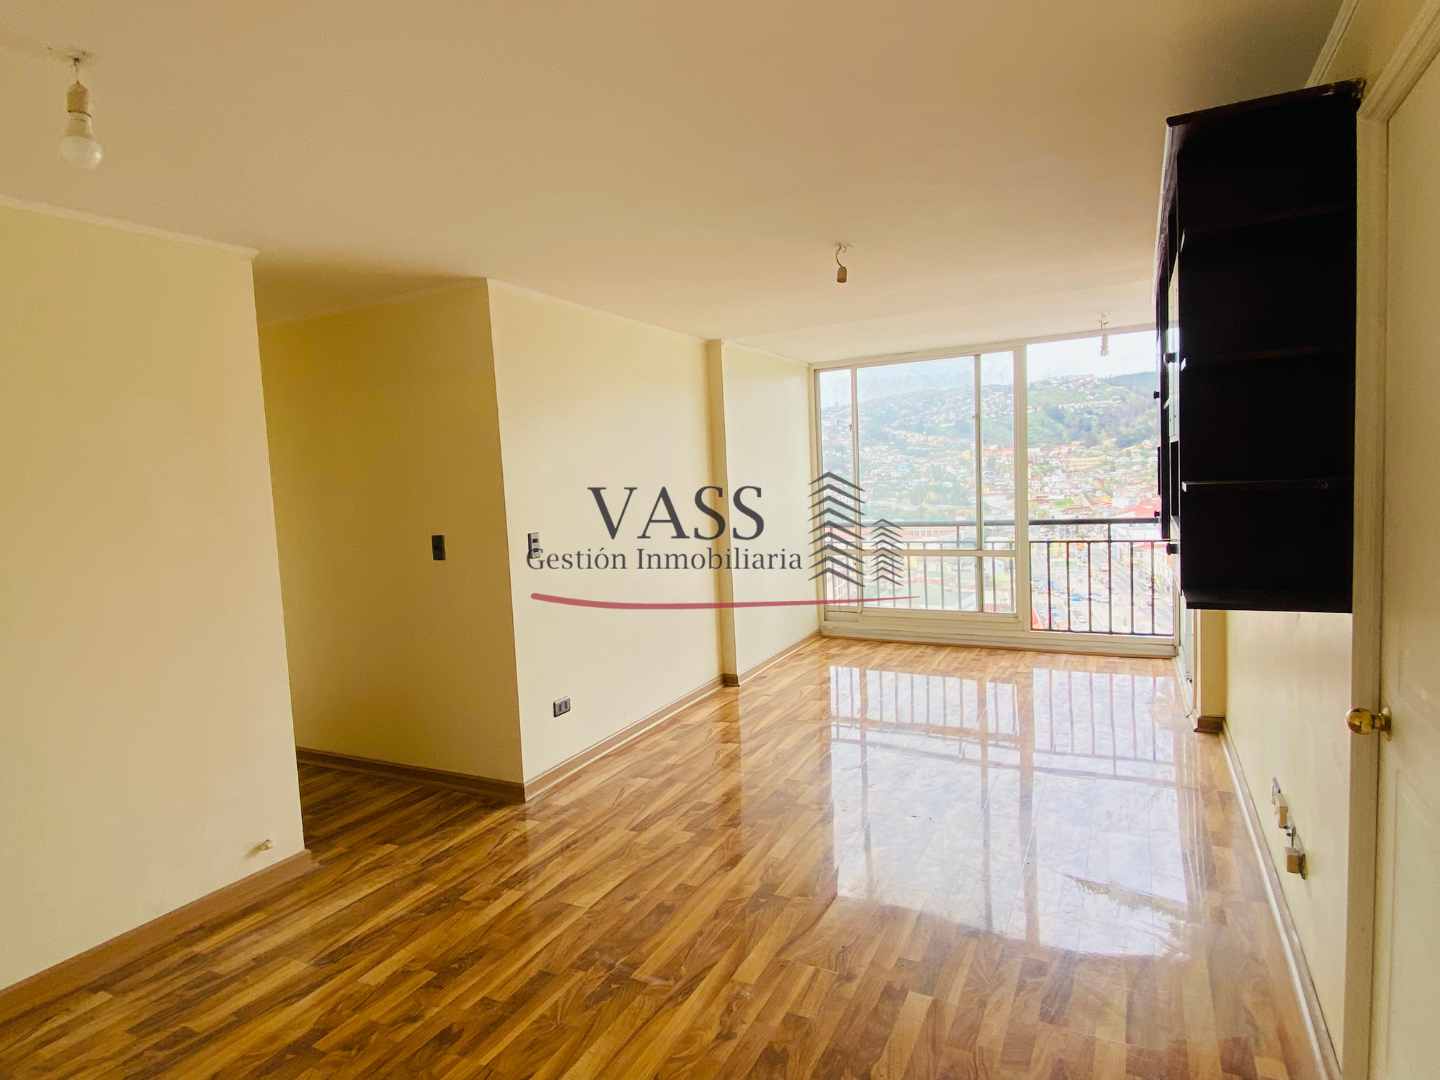 VASS Gestión Inmobiliaria vende departamento 3D 2B en sector Barón, Valparaíso